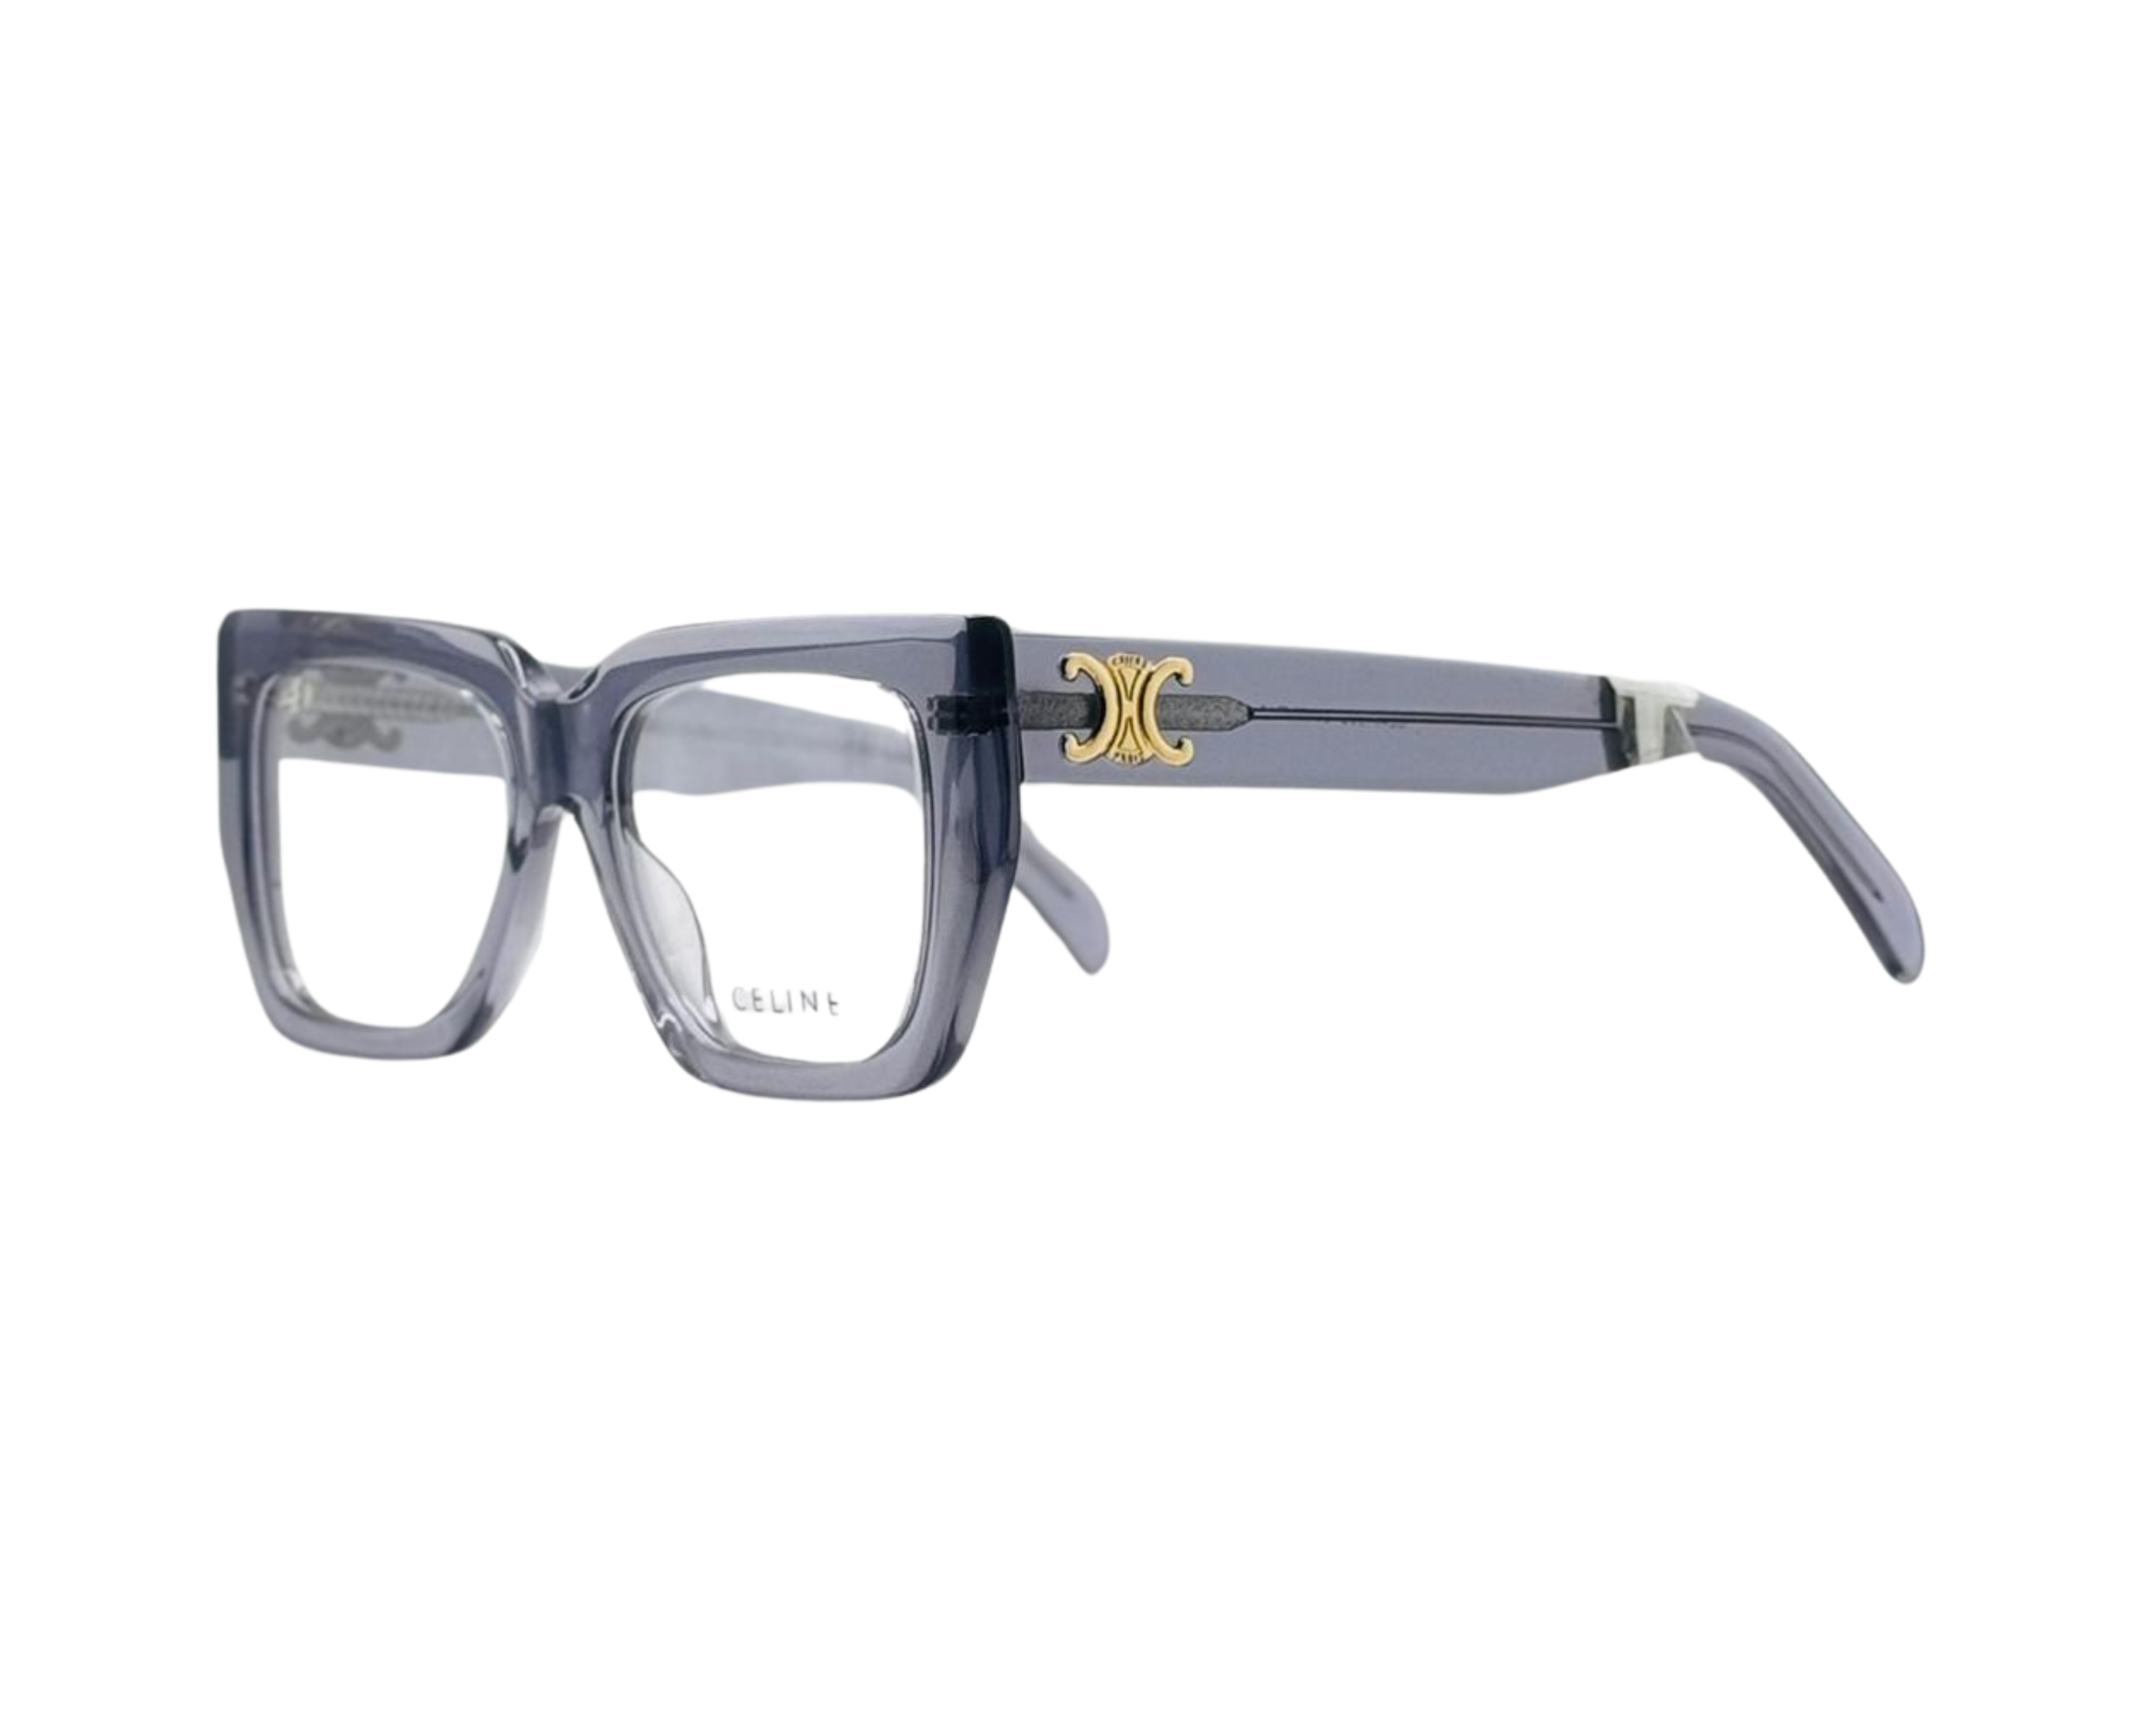 NS Luxury - J11 - Grey - Eyeglasses